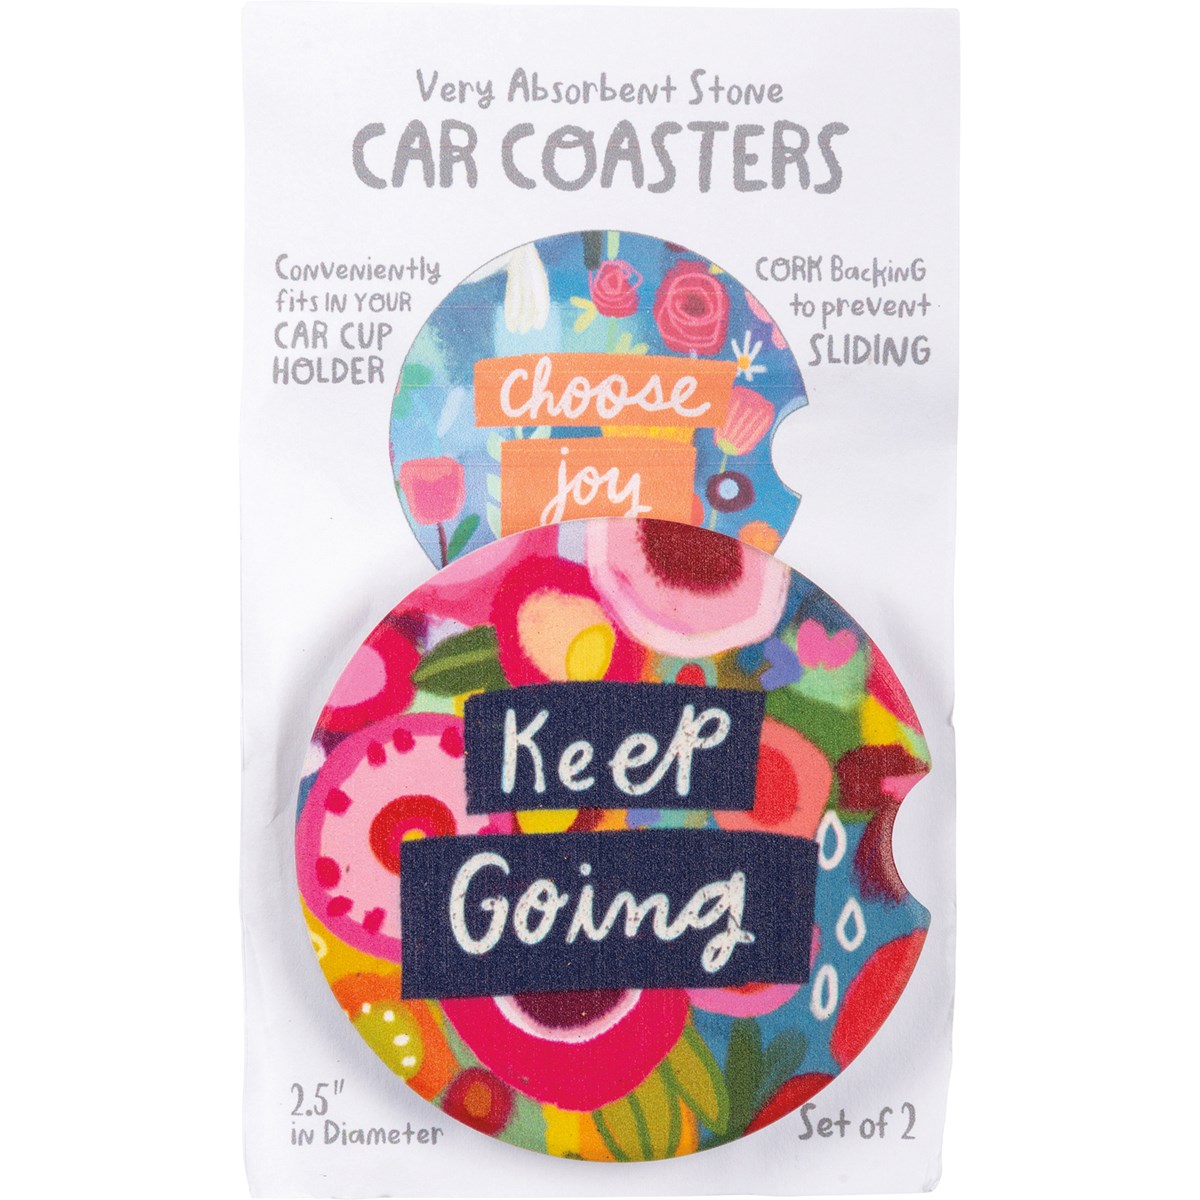 Keep Going Car Coasters - Stone, Cork